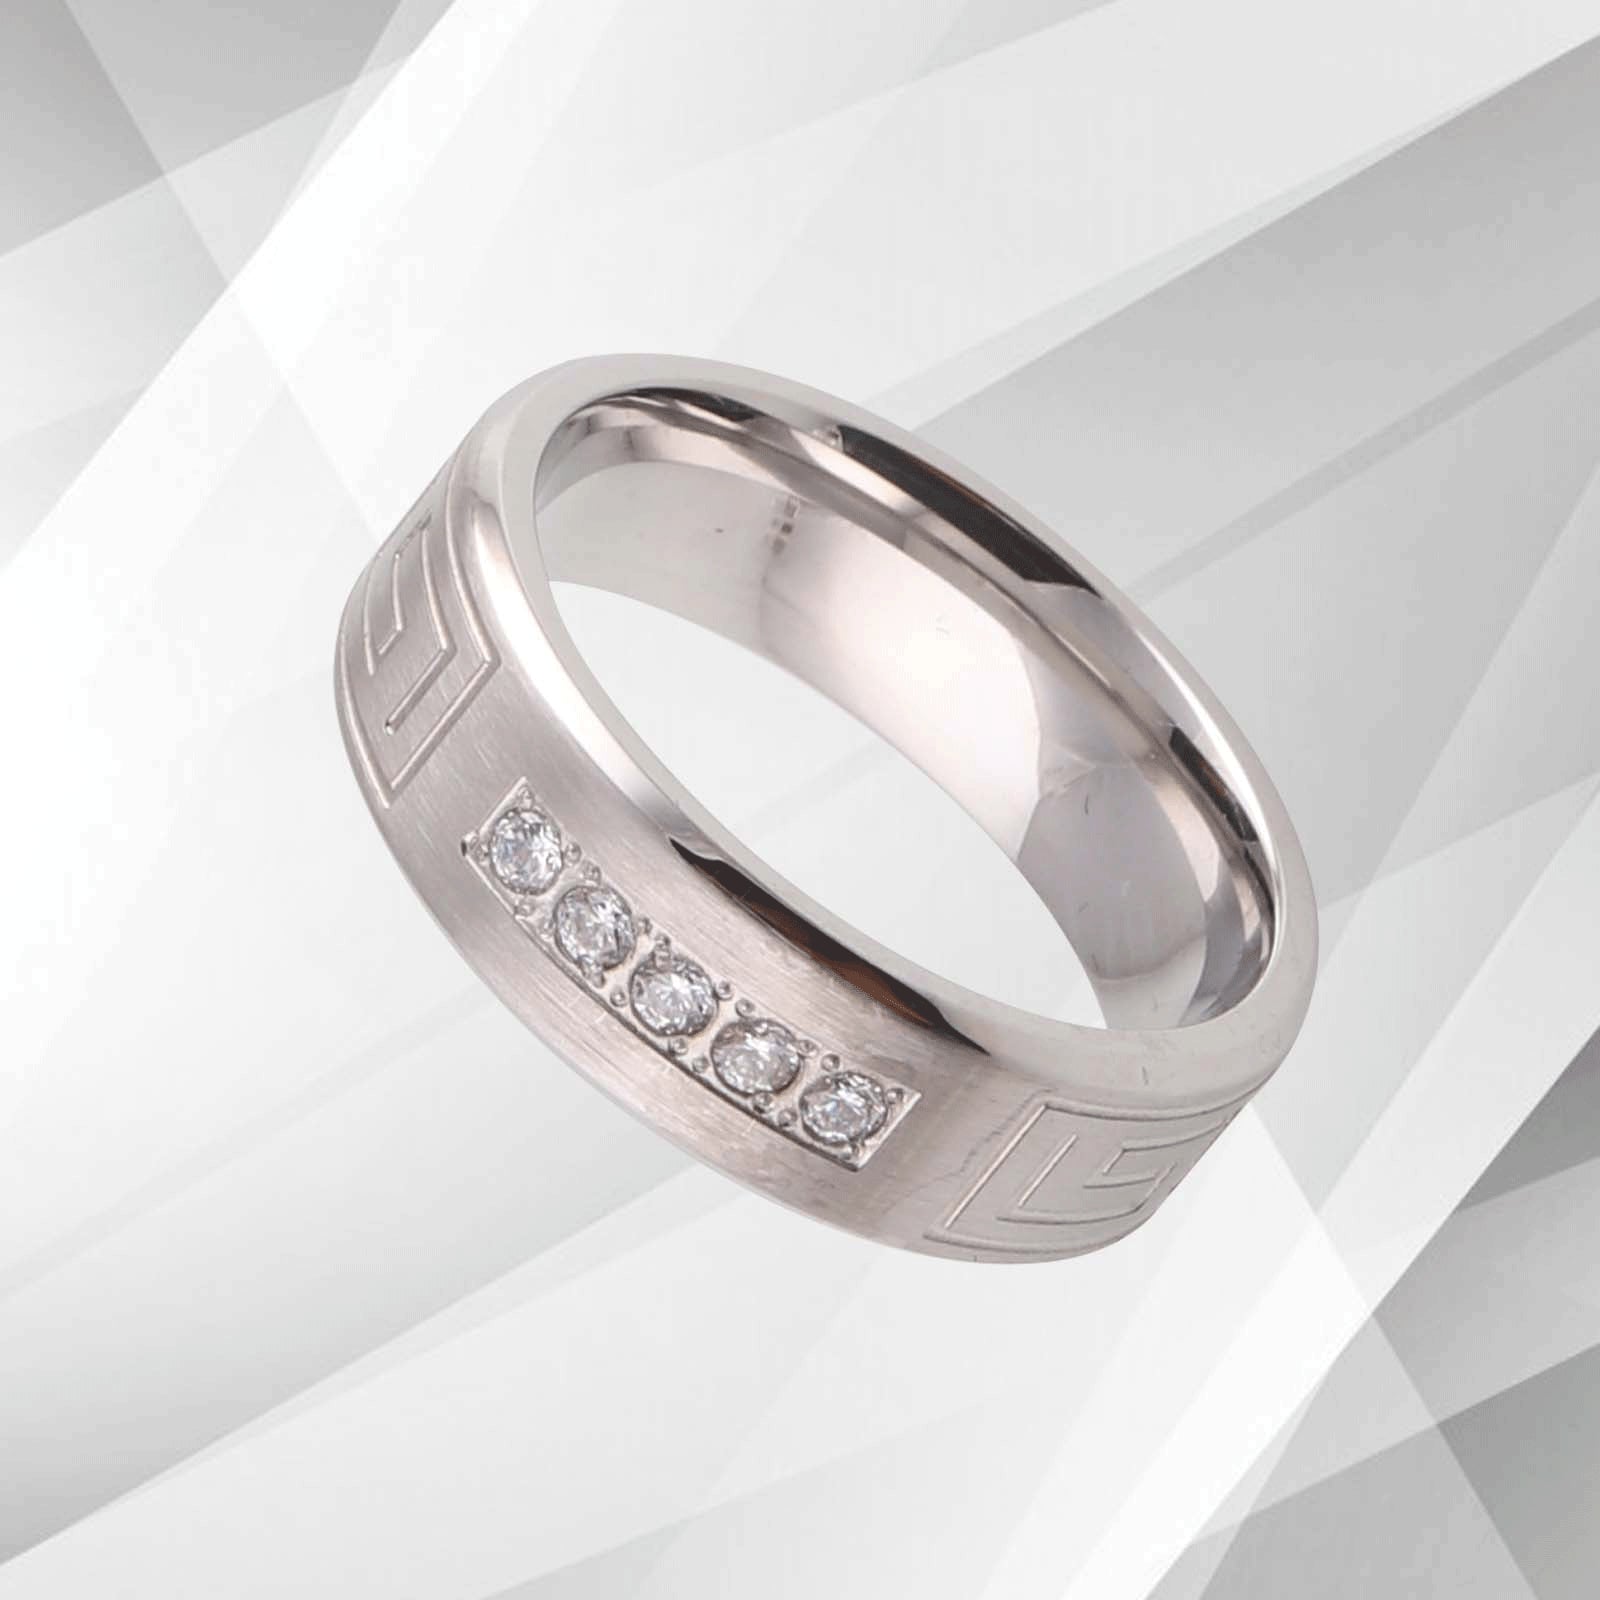 Designer Titanium CZ Diamond Wedding Band Ring - 7mm Flat Shape, 18Ct White Gold Finish, Comfort Fit for Women Bijou Her